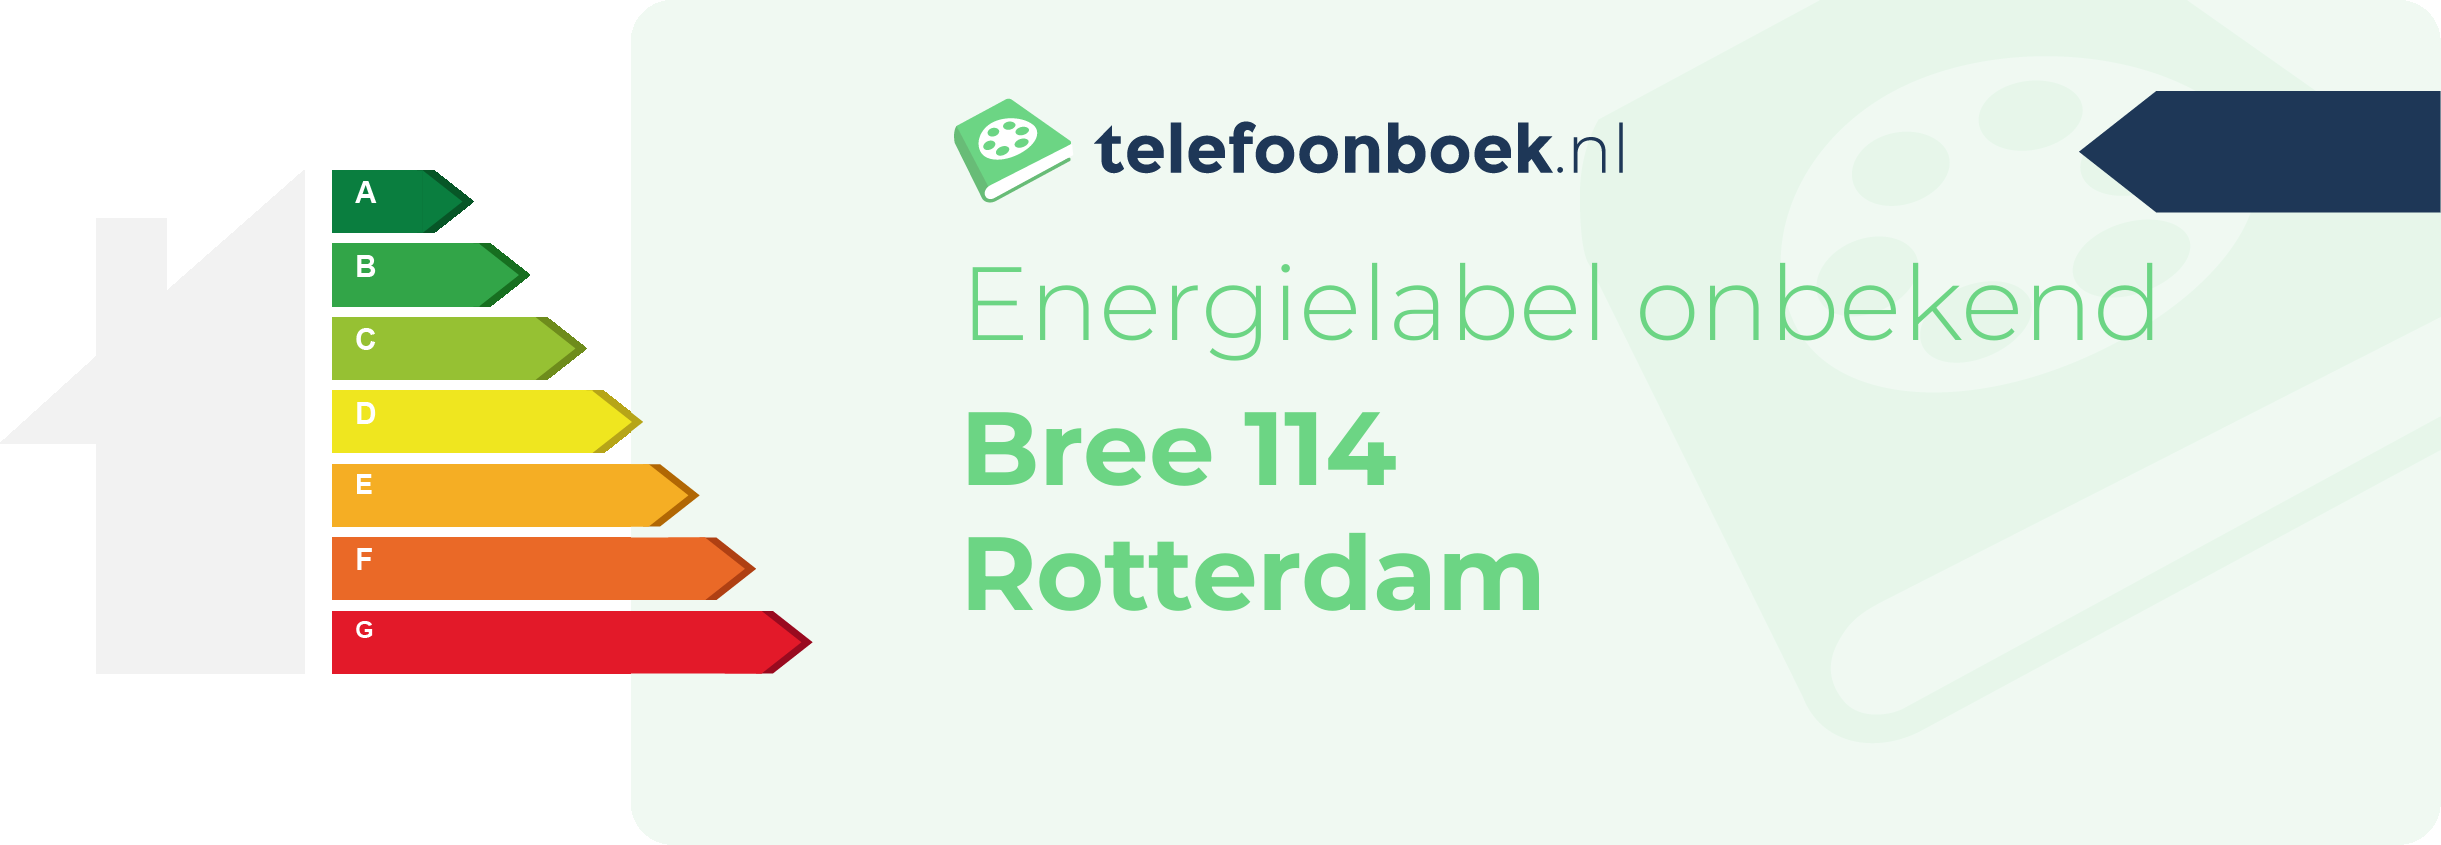 Energielabel Bree 114 Rotterdam